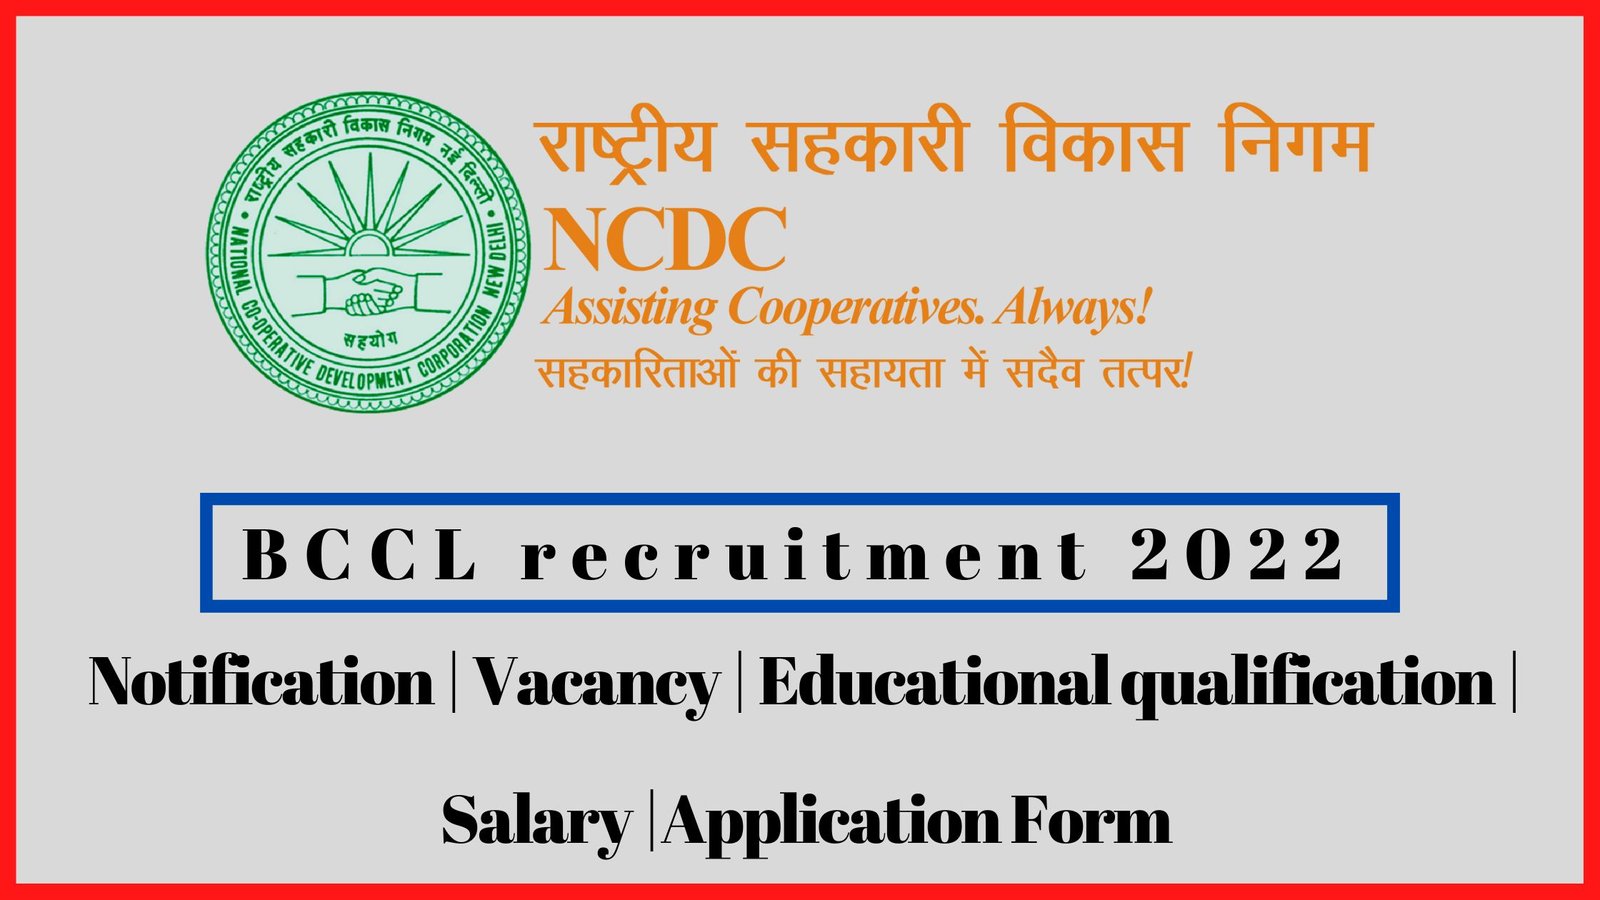 NCDC recruitment 2022 in tamil